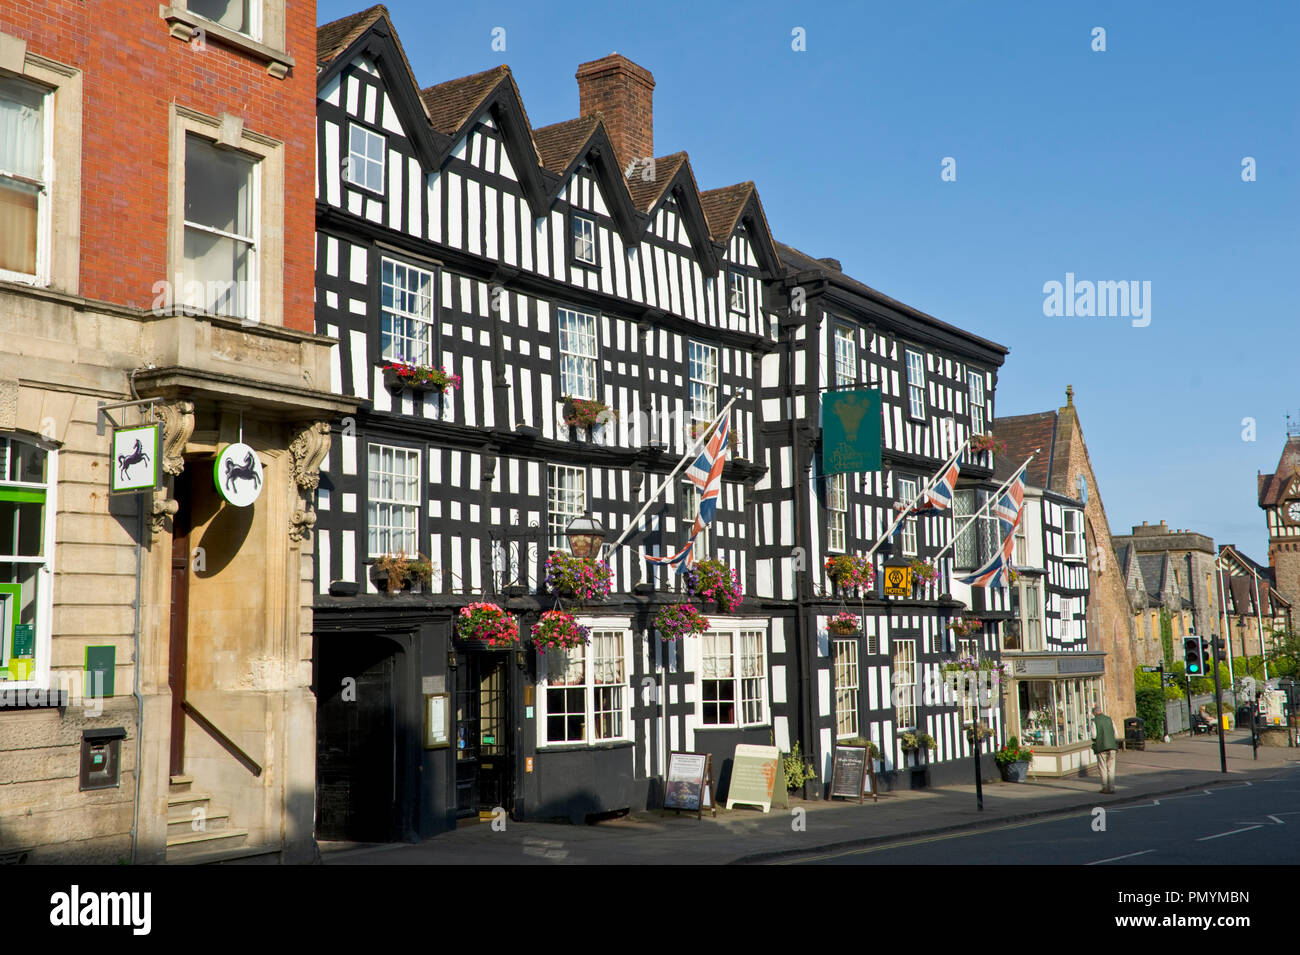 The Feathers Hotel dating from 16th century on High Street Ledbury Herefordshire England UK Stock Photo